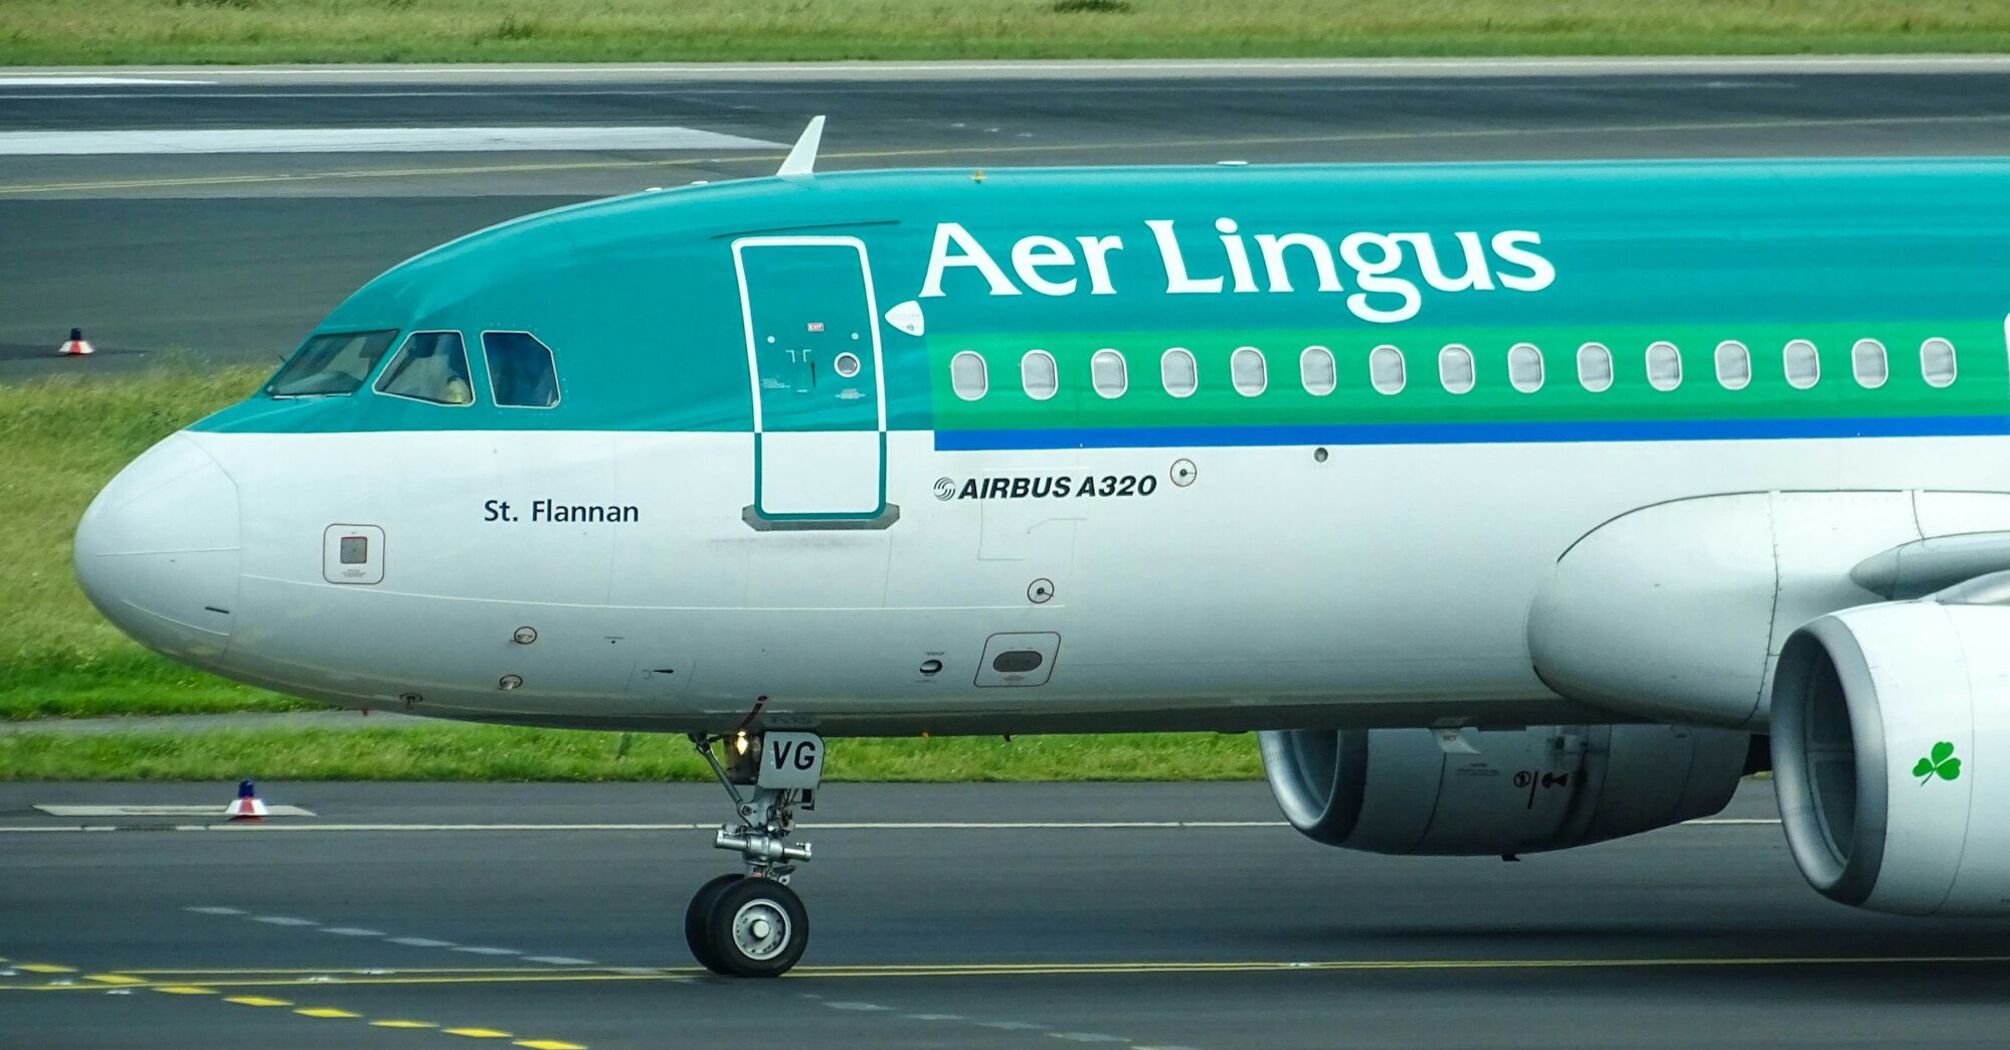 Aer Lingus airplane on the runway